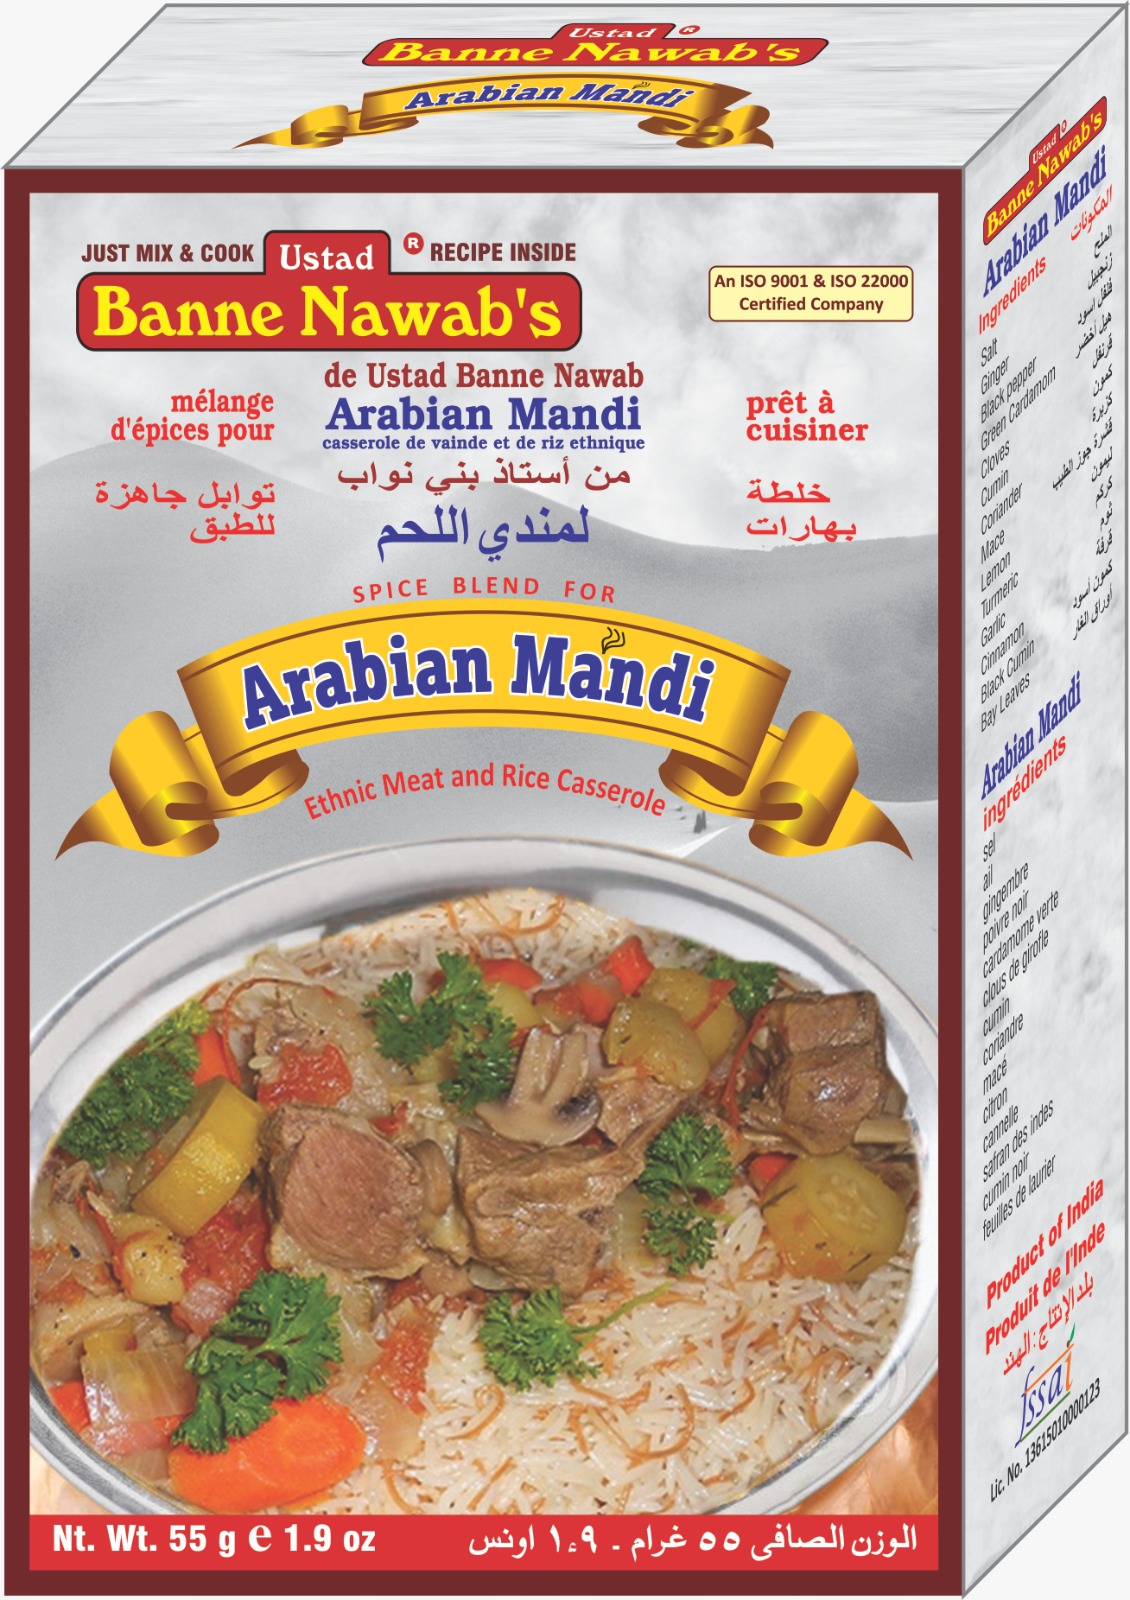 Ustad Banne Nawab's Arabian Mandi